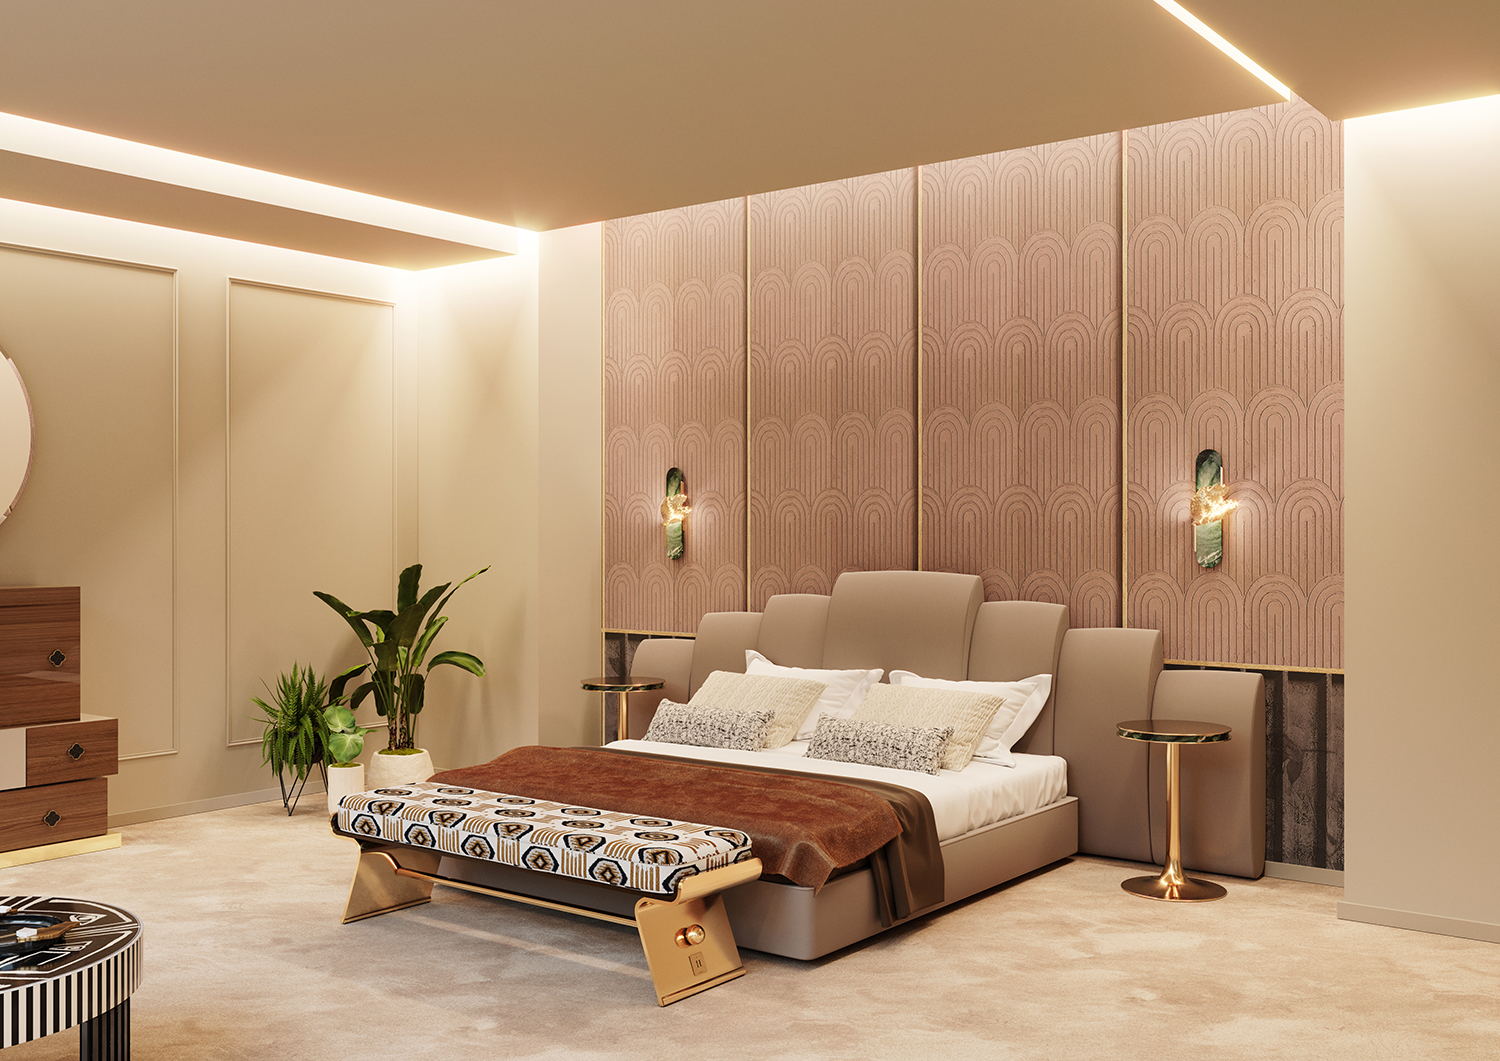 Bedroom Interior Design Collection   By Hommés Studio   Hommés ...